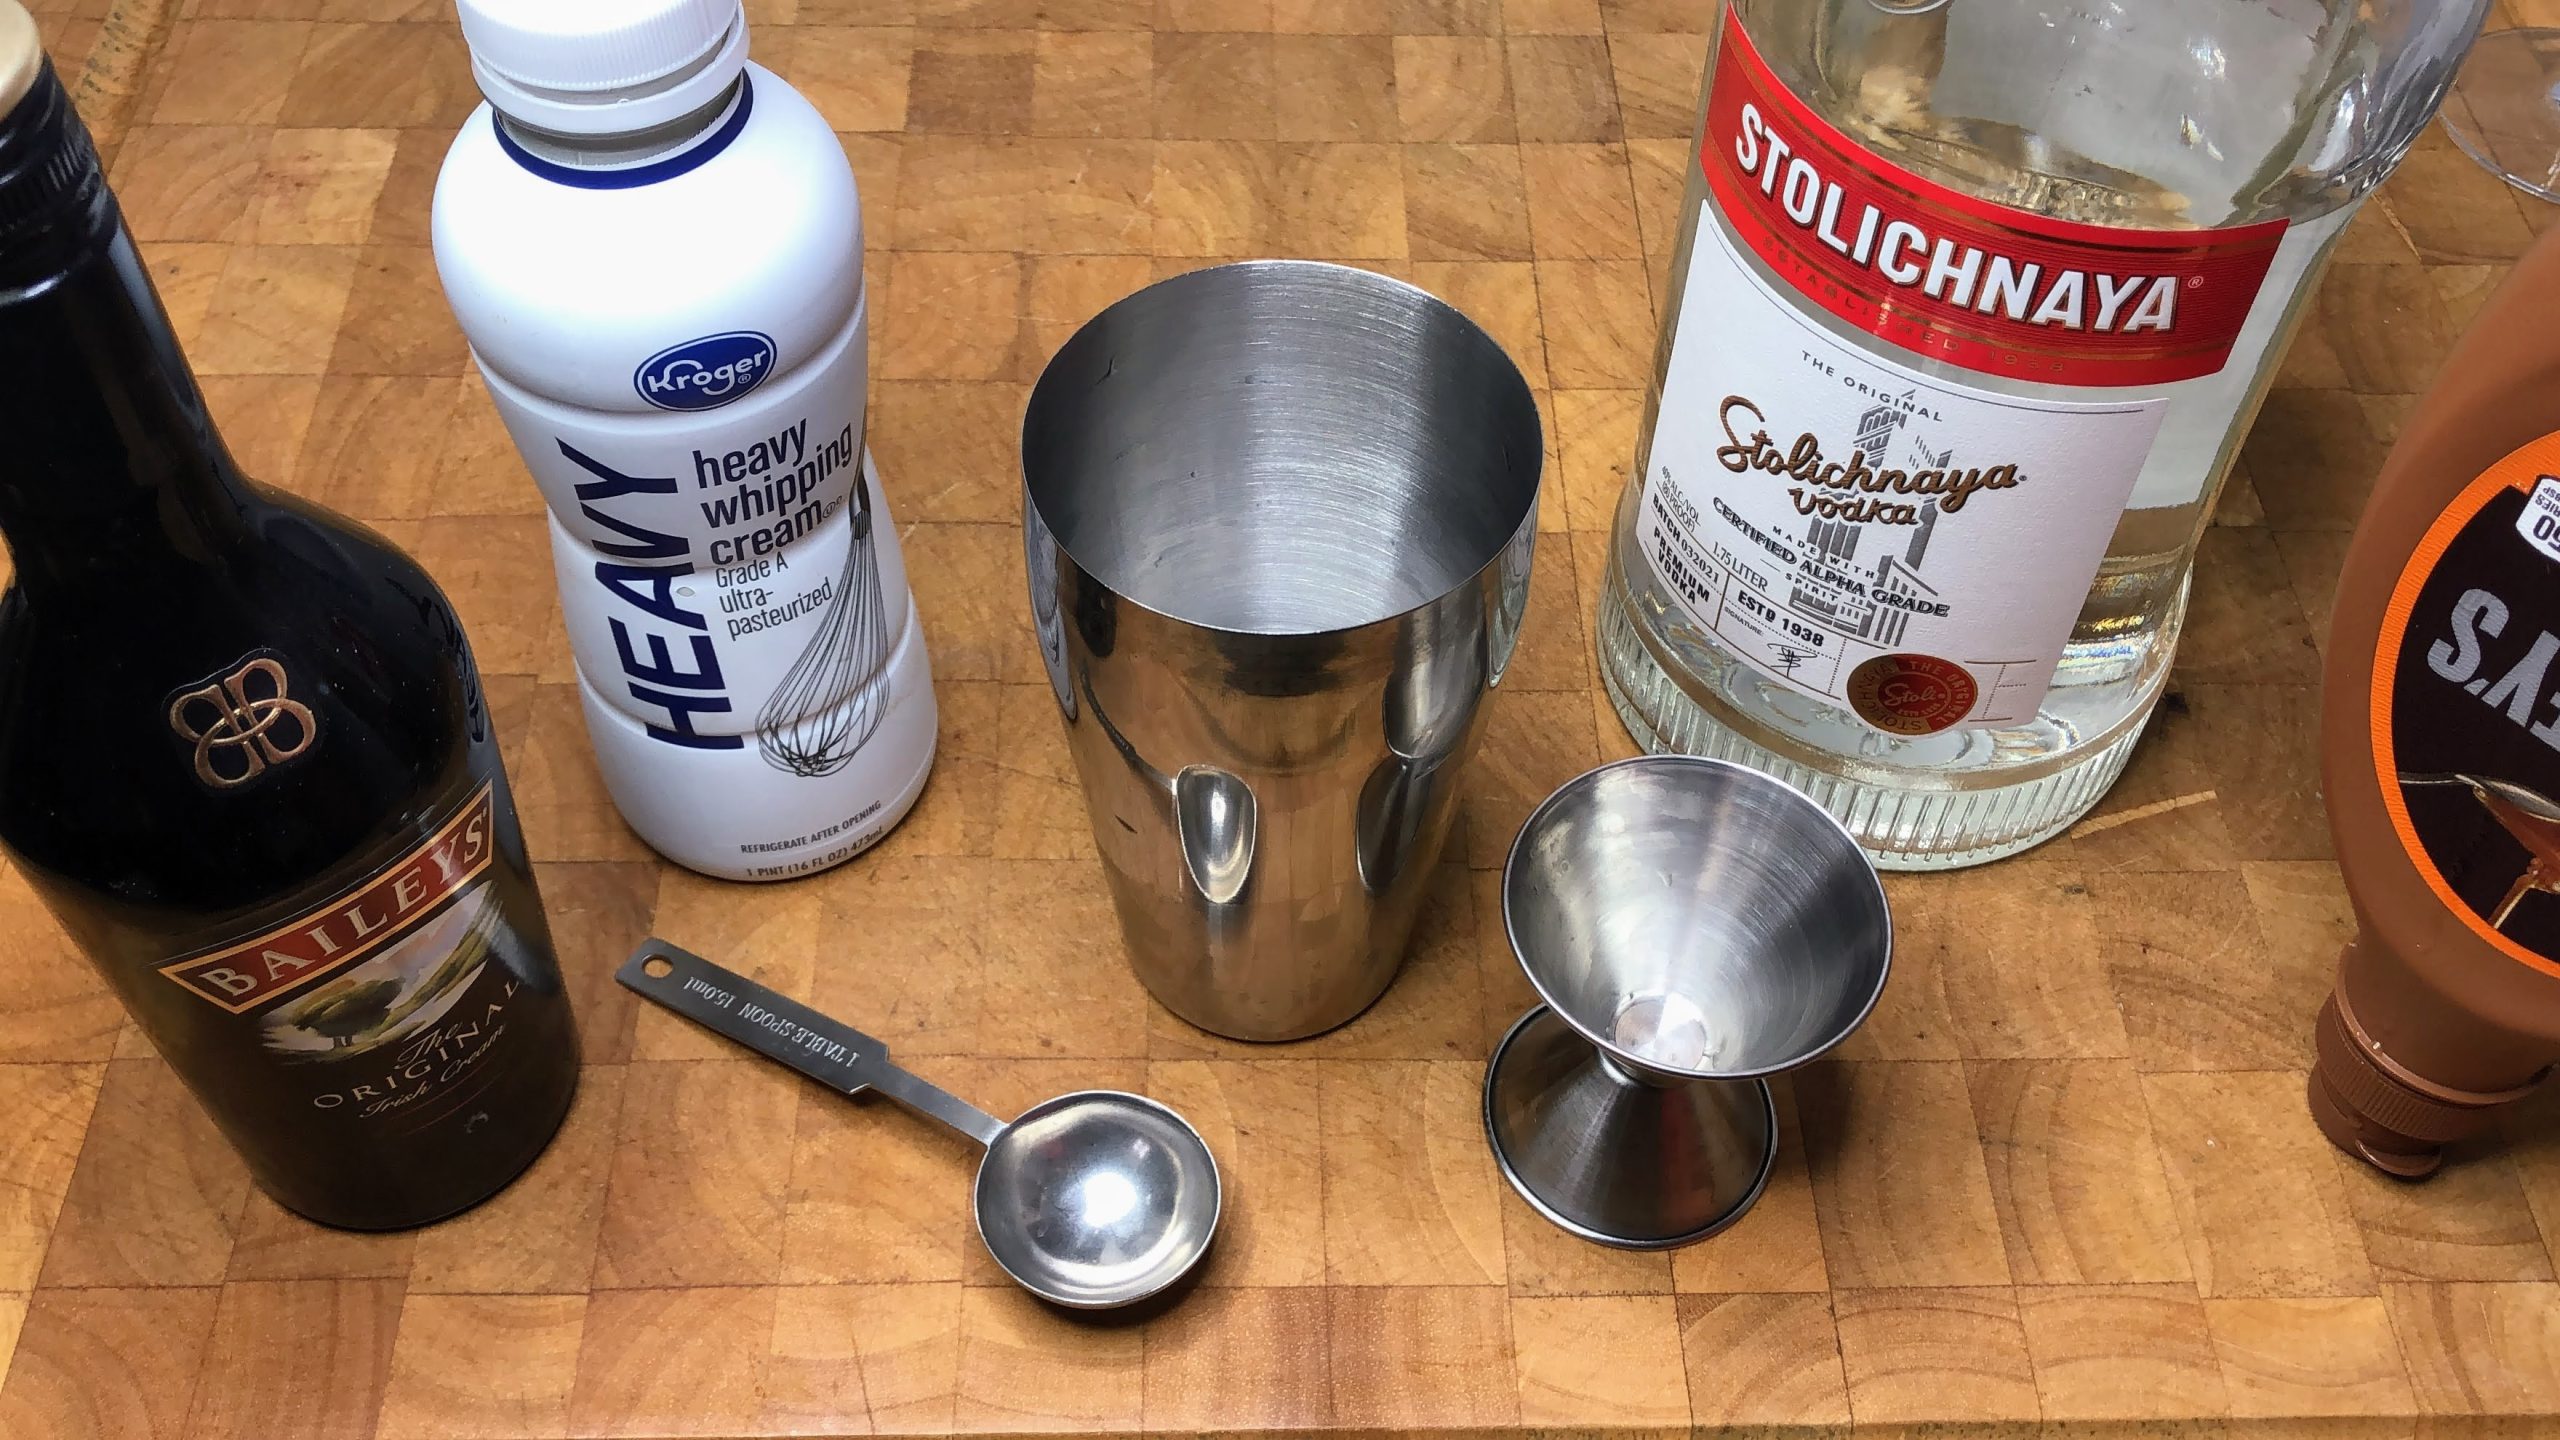 cocktail shaker next to teaspoon, jigger, caramel syrup and bottles of irish cream, heavy cream, vodka